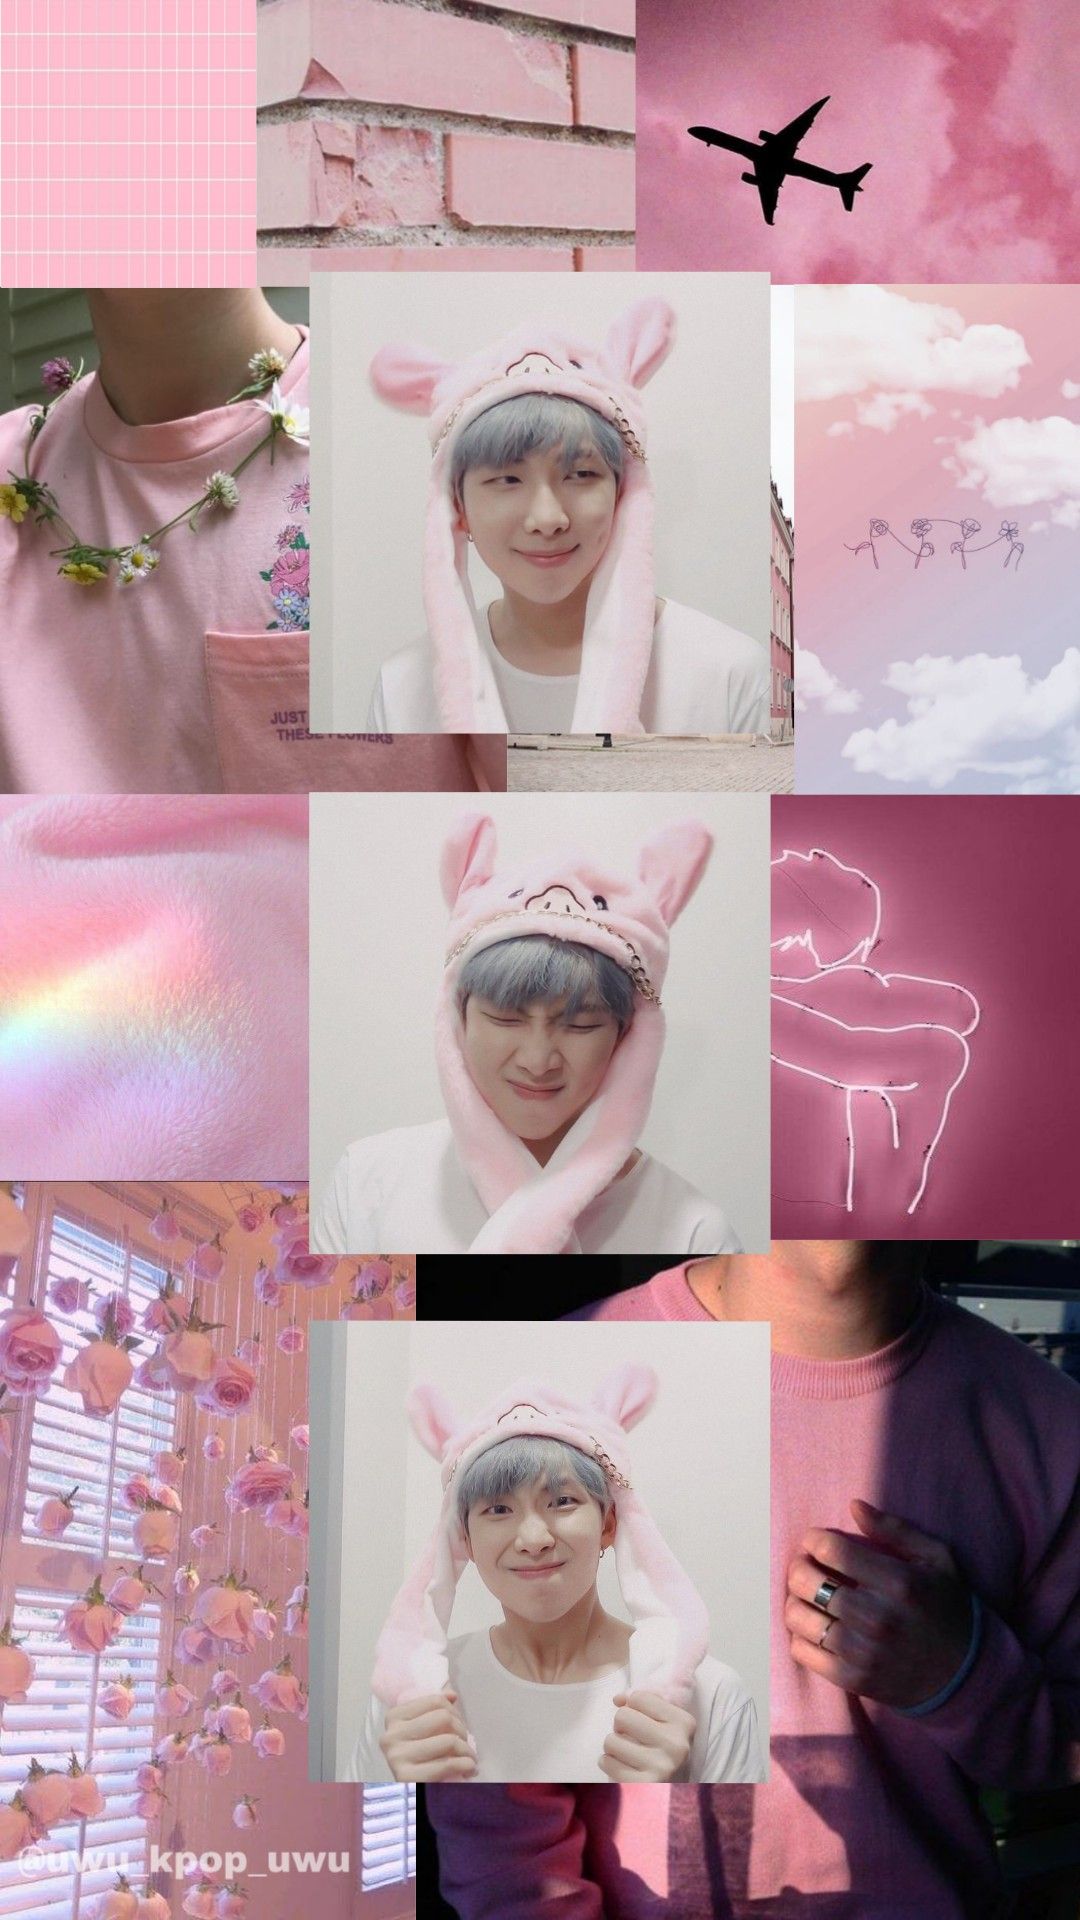 Wallpaper aesthetic pink bts namjoon cute kim namjoon bts aesthetic pictures namjoon